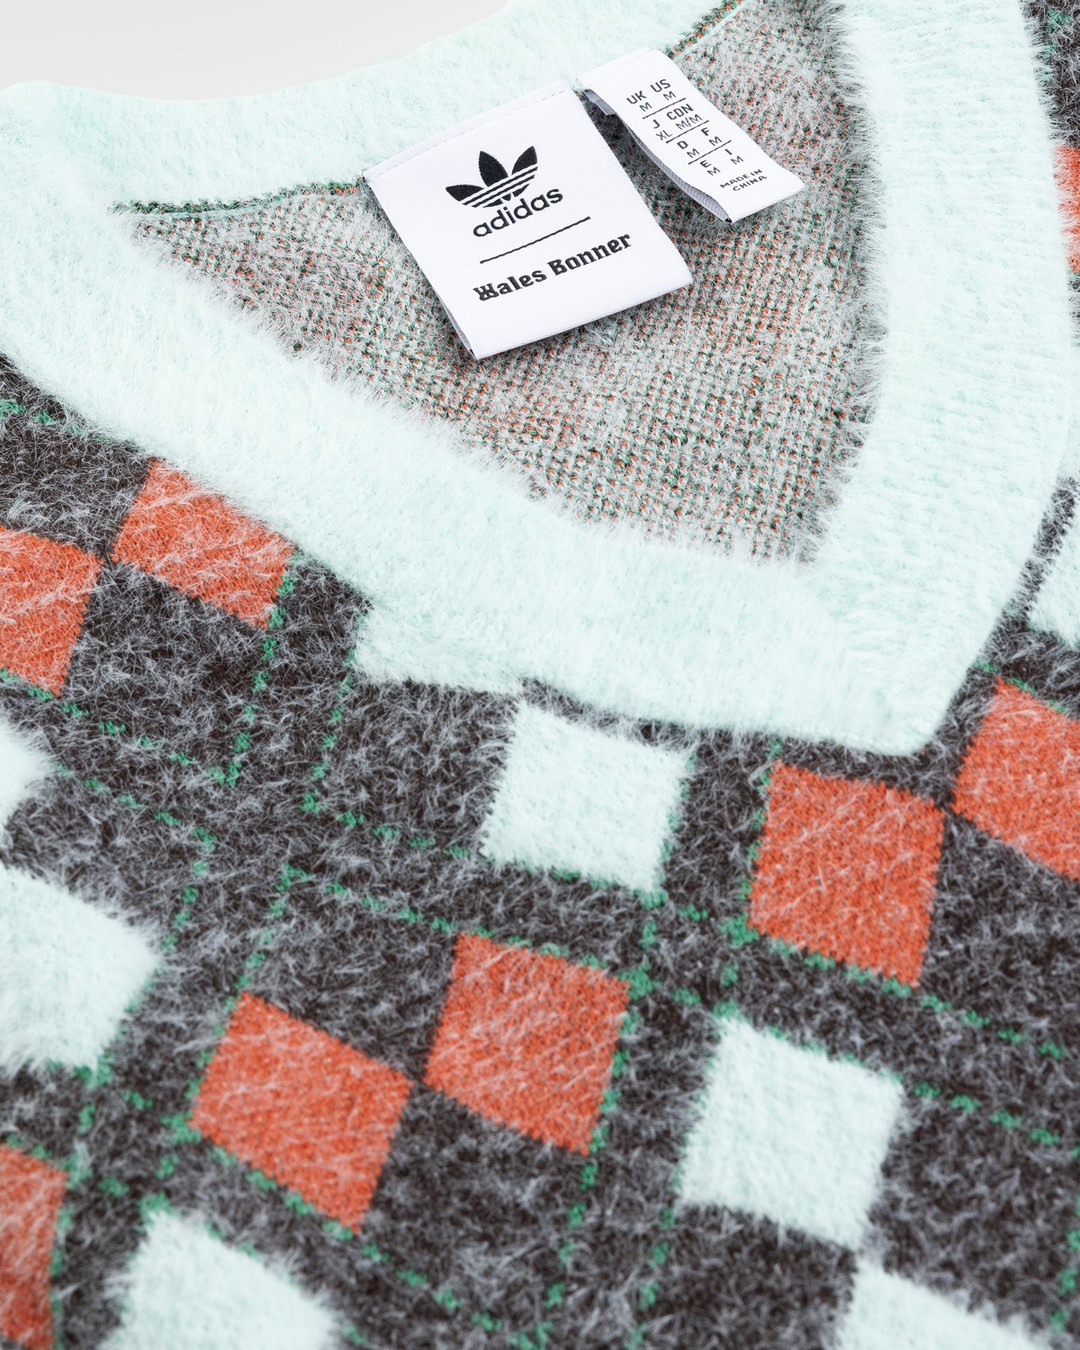 Adidas x Wales Bonner – Knit Argyle Vest Multi - Knitwear - Multi - Image 5